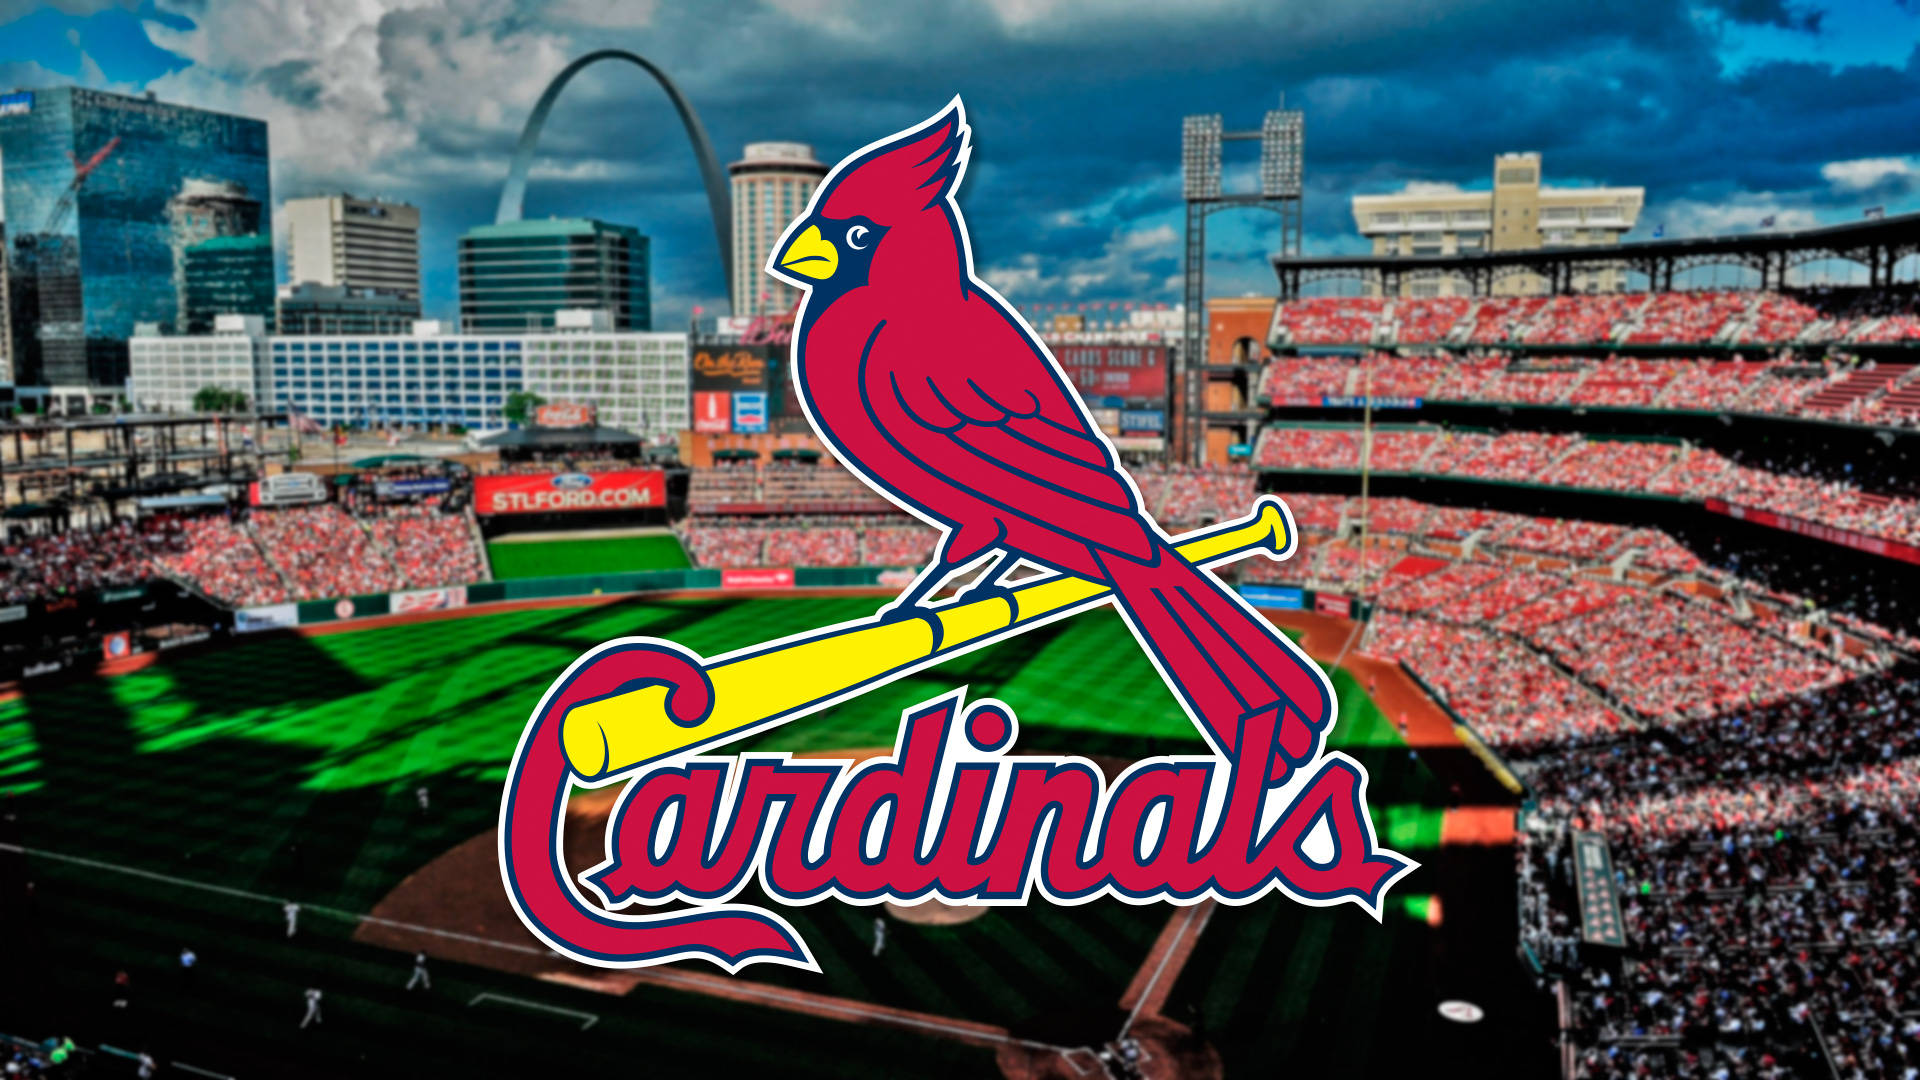 St Louis Cardinals Red Bird On Field Background